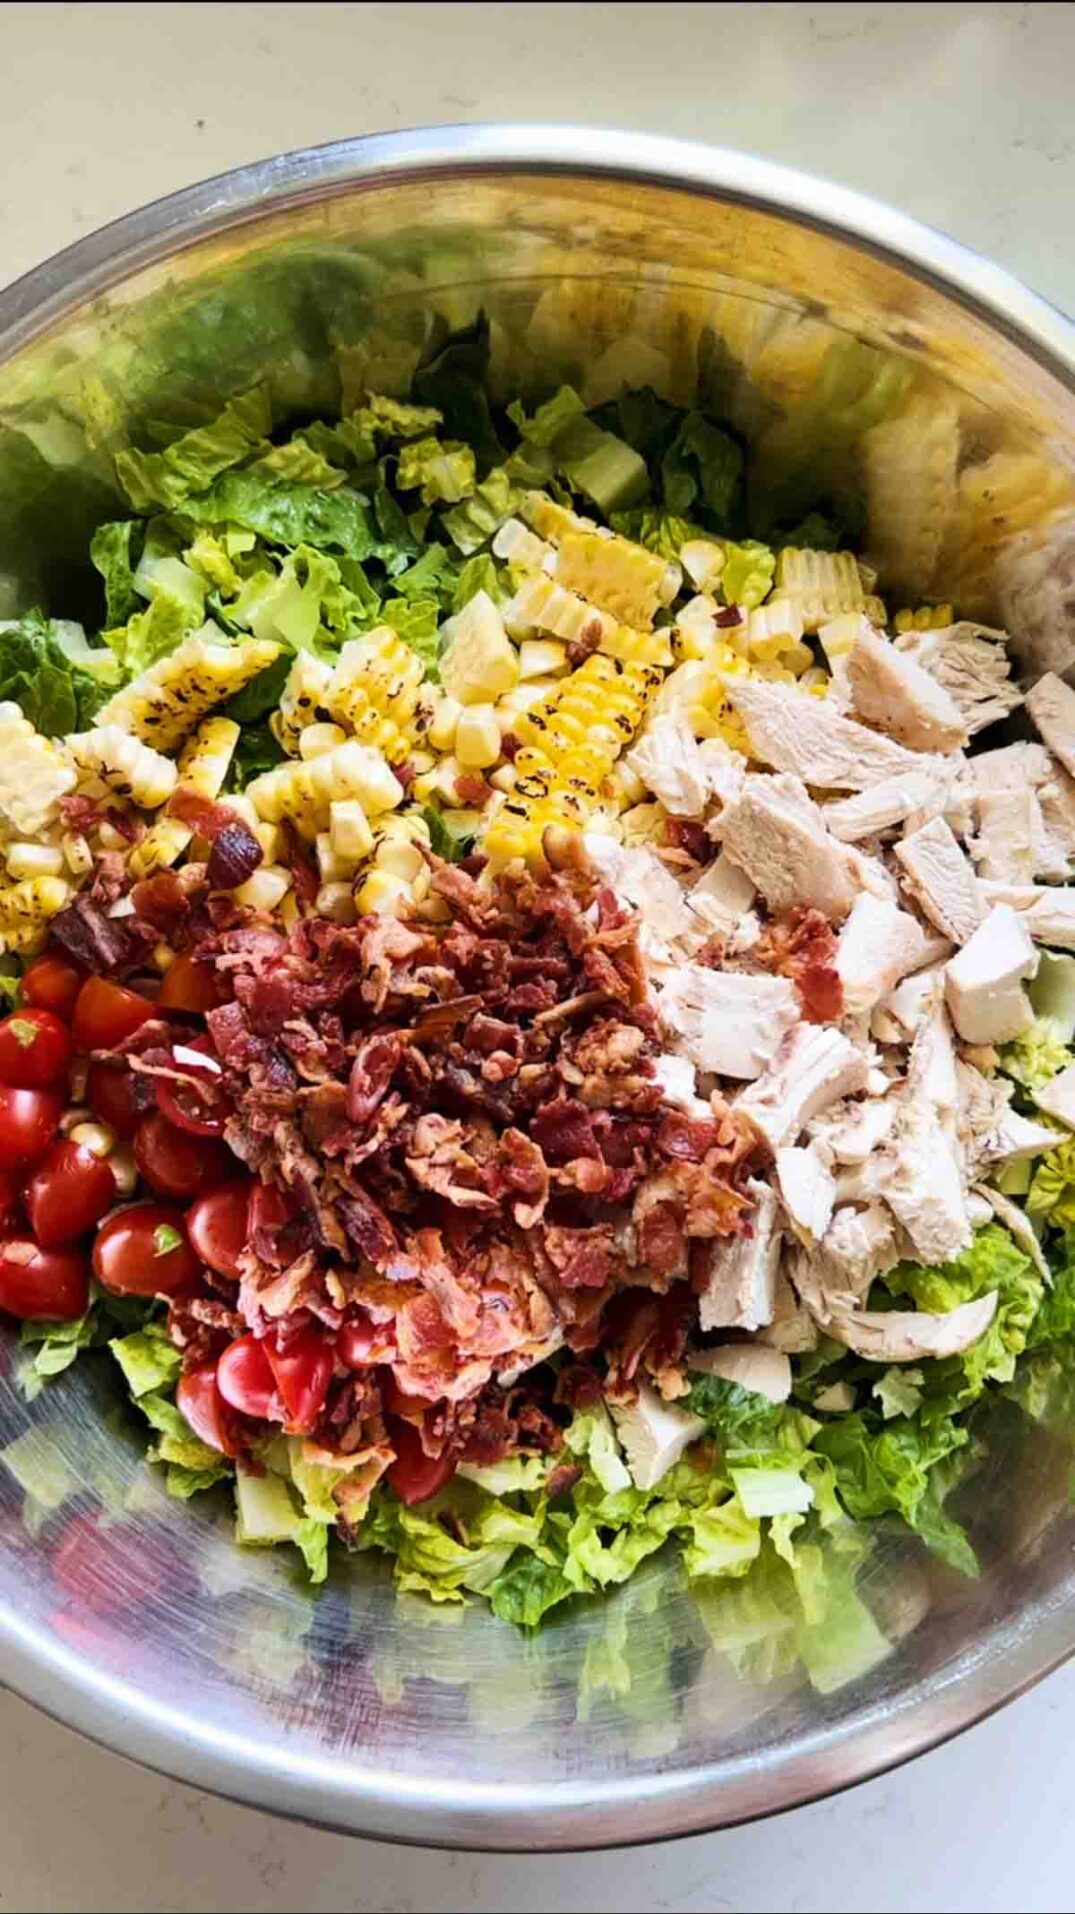 colorful ingredients in a big salad bowl.